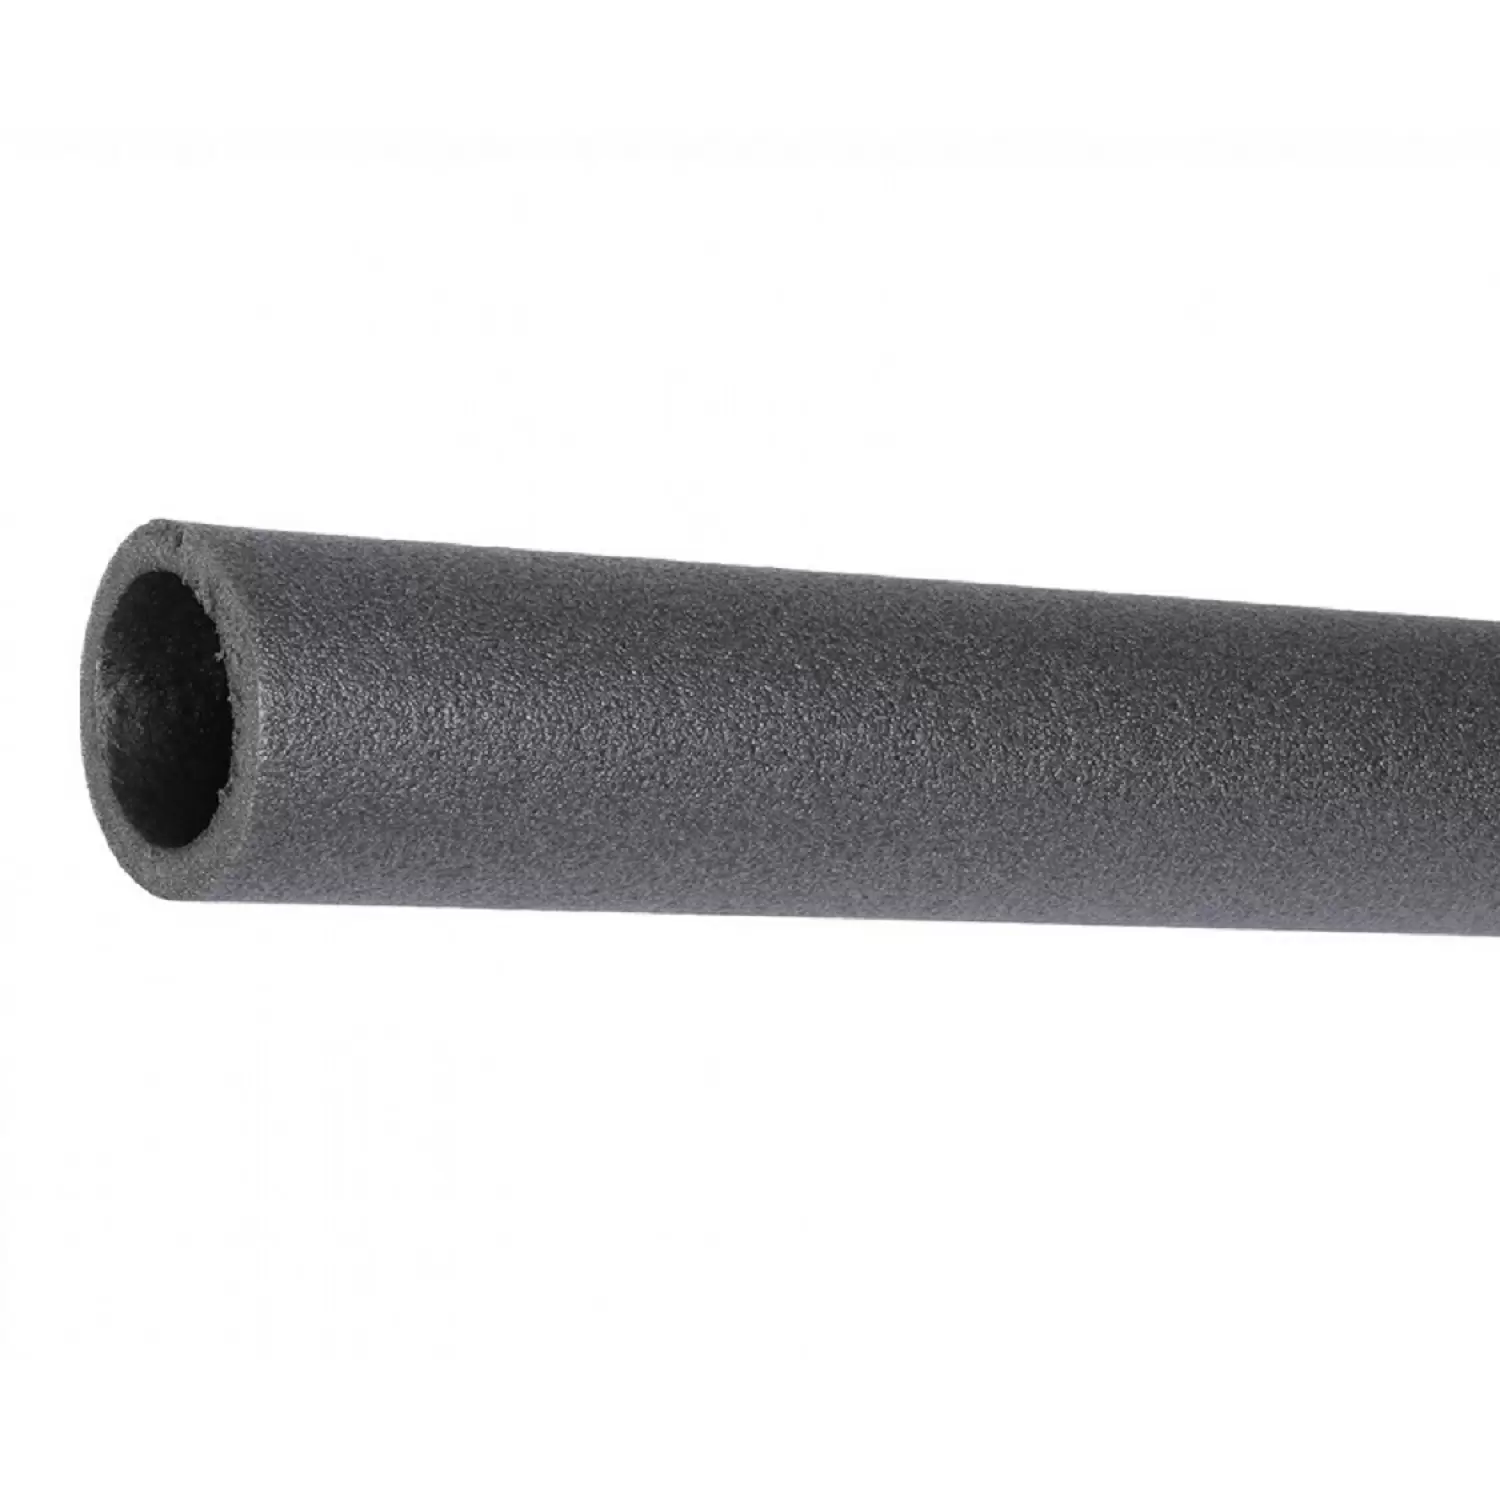 Теплоизоляция Энергофлекс супер 28/9 для труб диаметром 25 мм, трубка 2 м